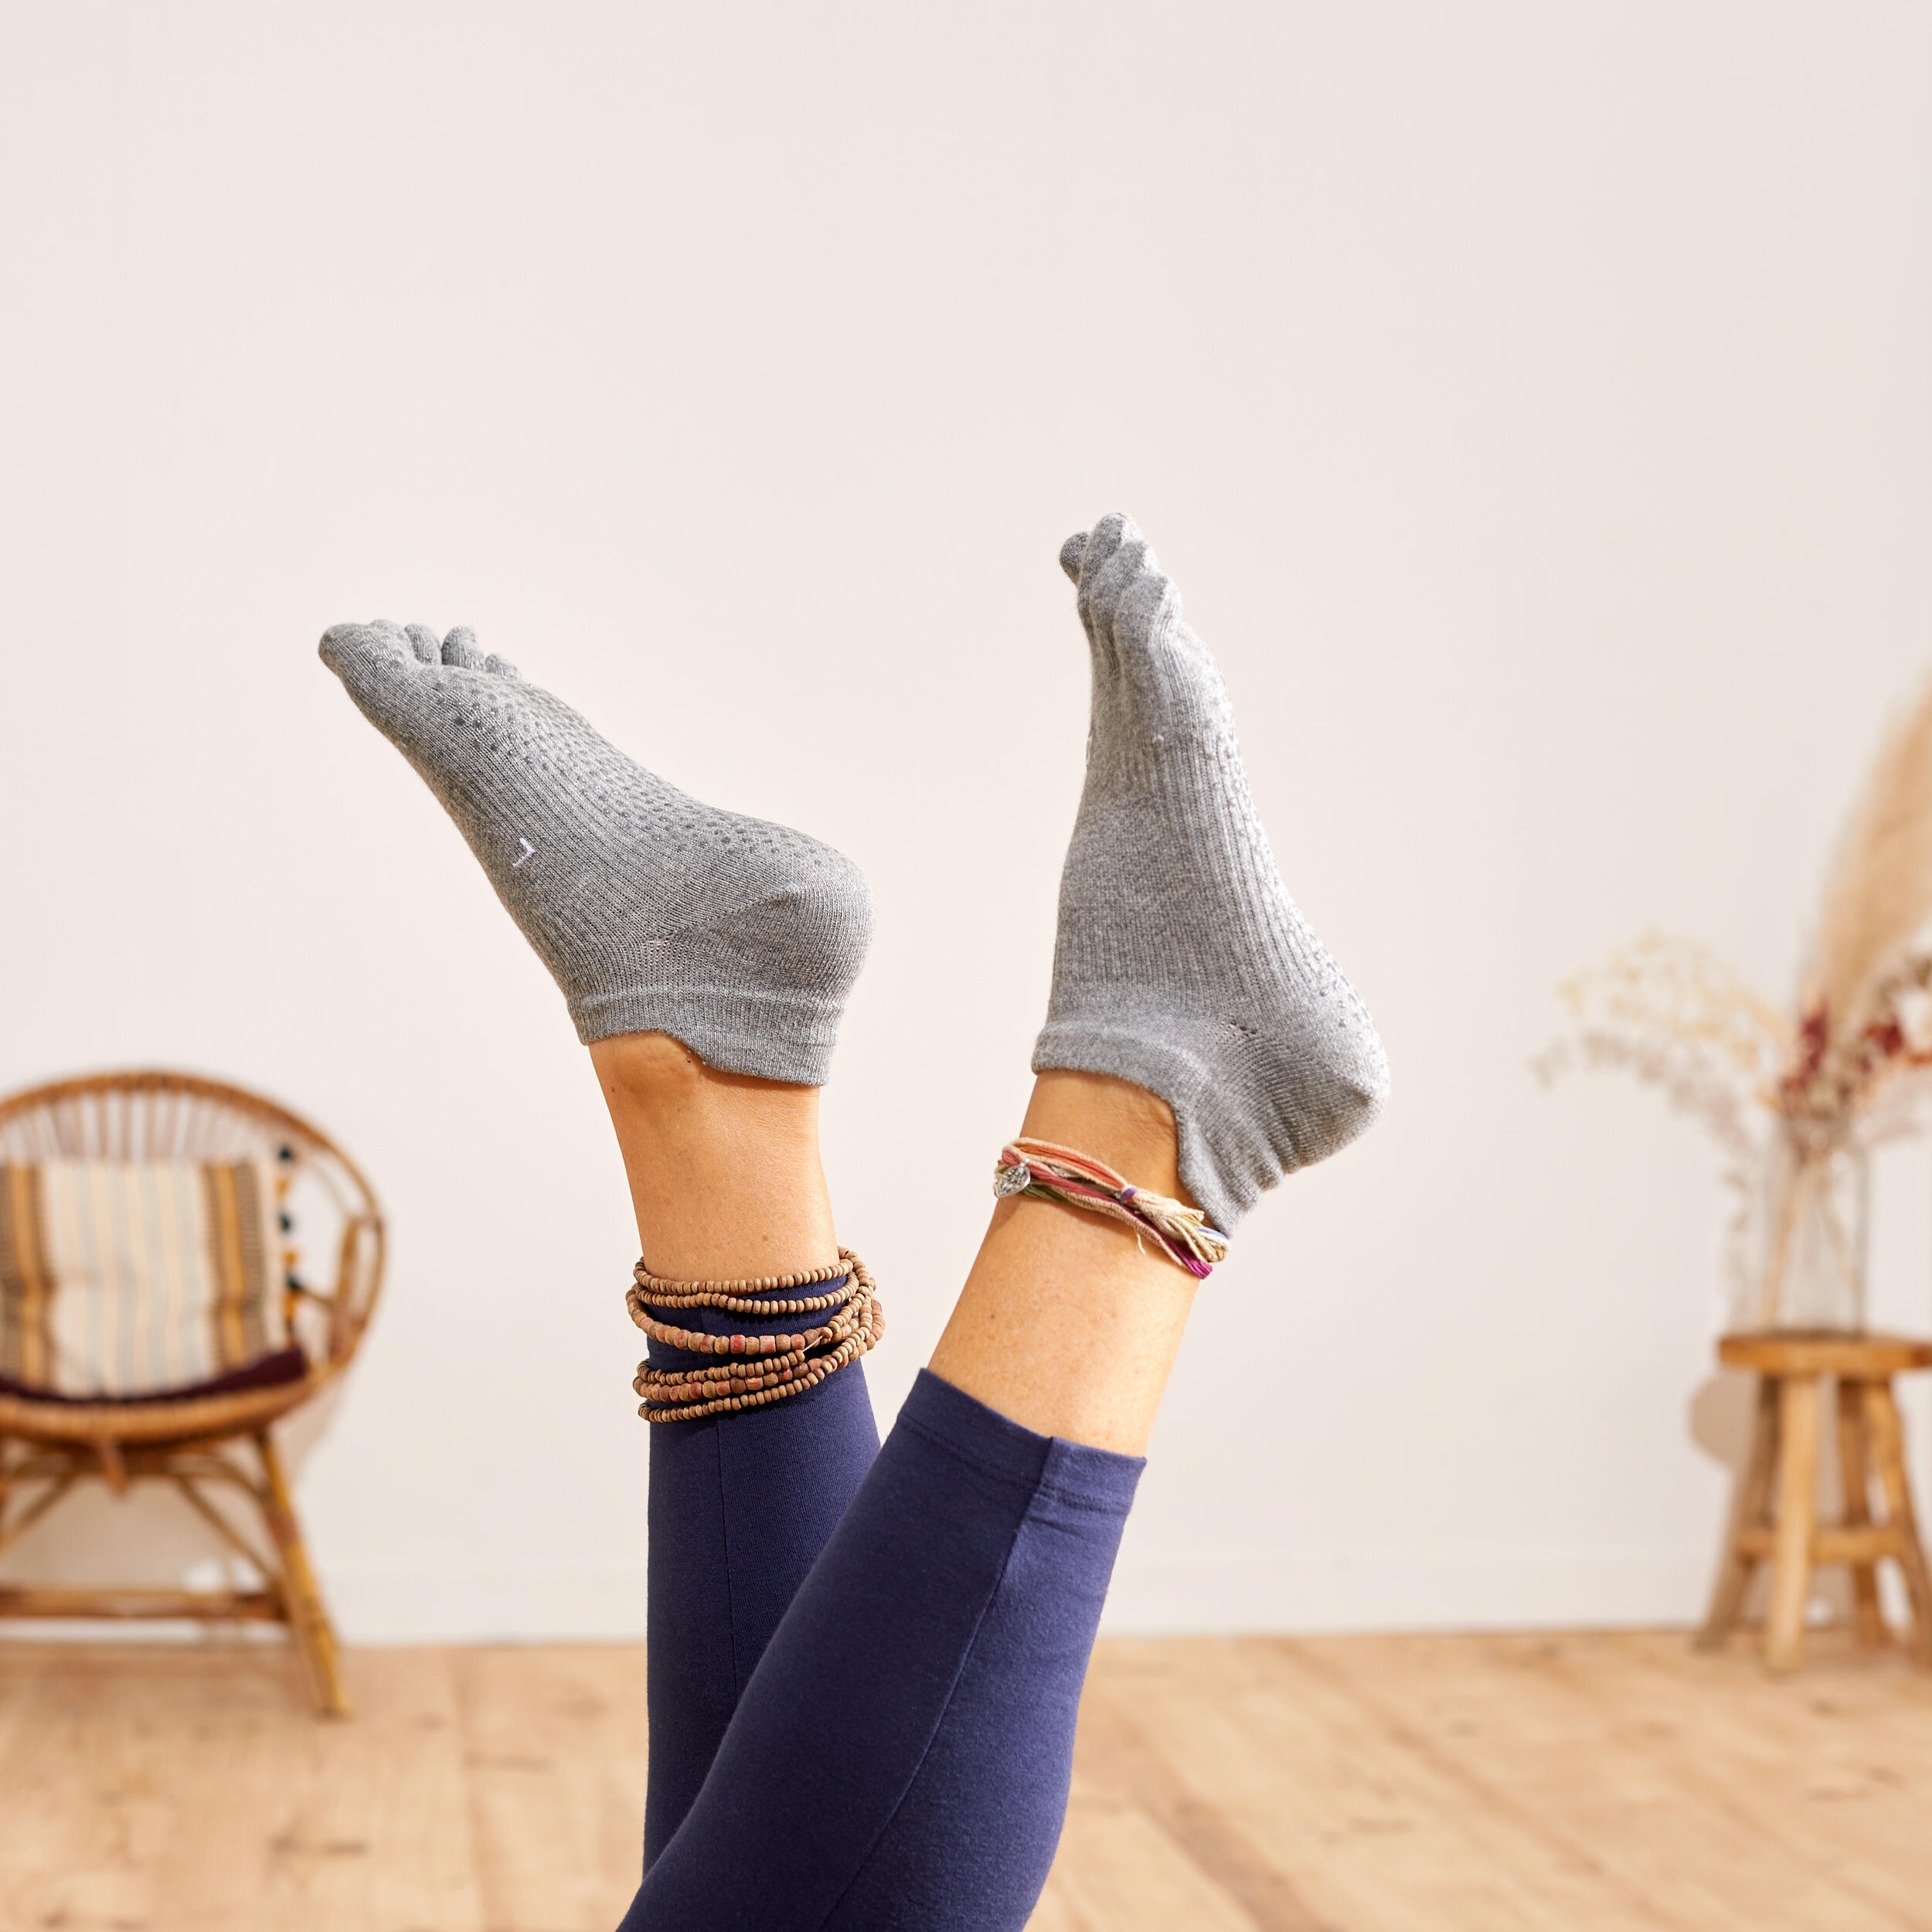 Professional Womens Yoga Socks Non Slip Silica Gel Body Mechanics Sock For  Gym, Yoga, And Sports Warm Cotton Spandex Toe Design From Vivian5168, $1.89